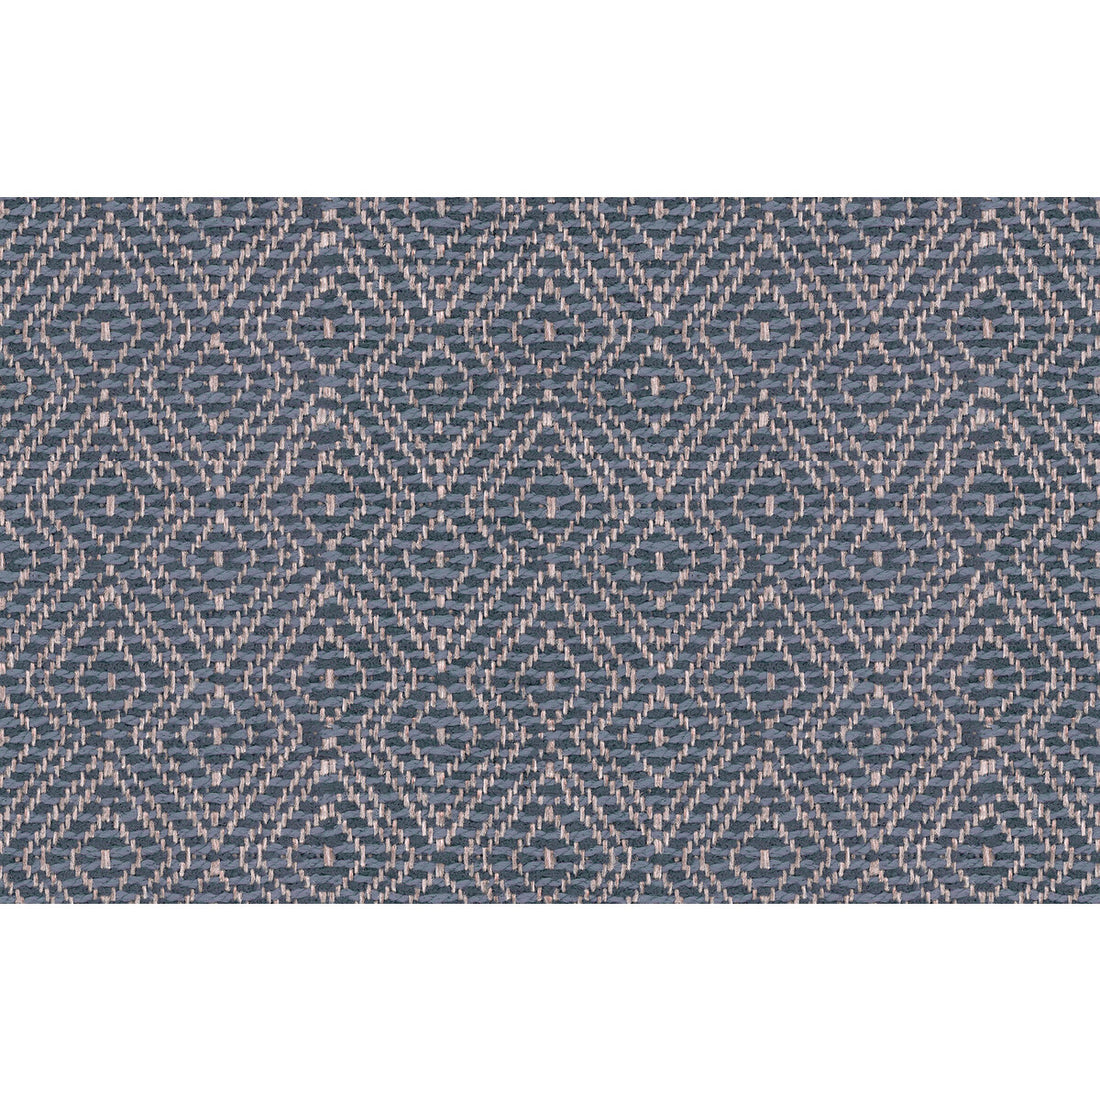 Kravet Smart fabric in 34334-5 color - pattern 34334.5.0 - by Kravet Smart